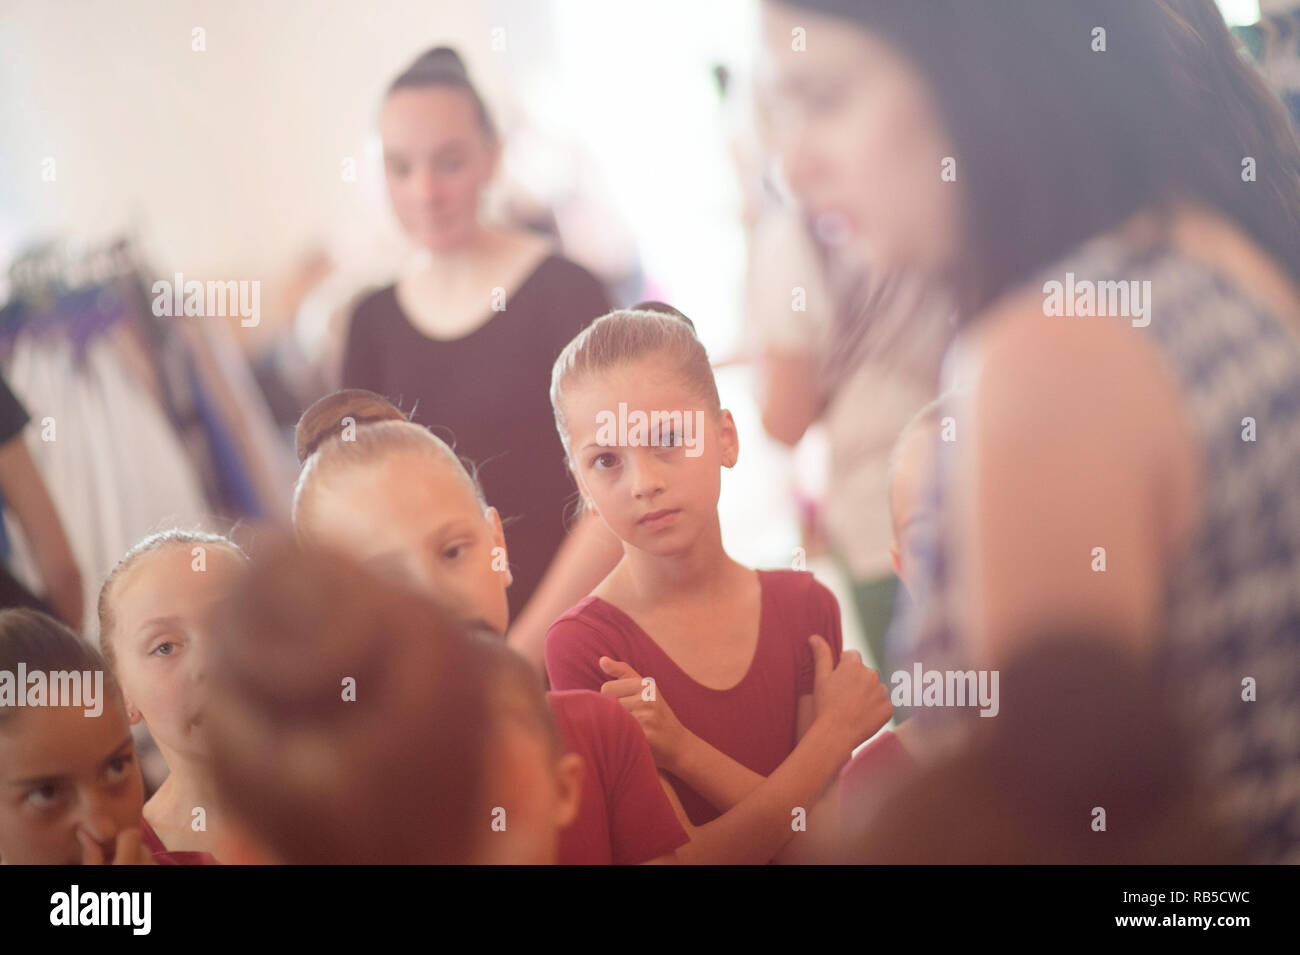 Russian School Girls Stock Photos & Russian School Girls ...